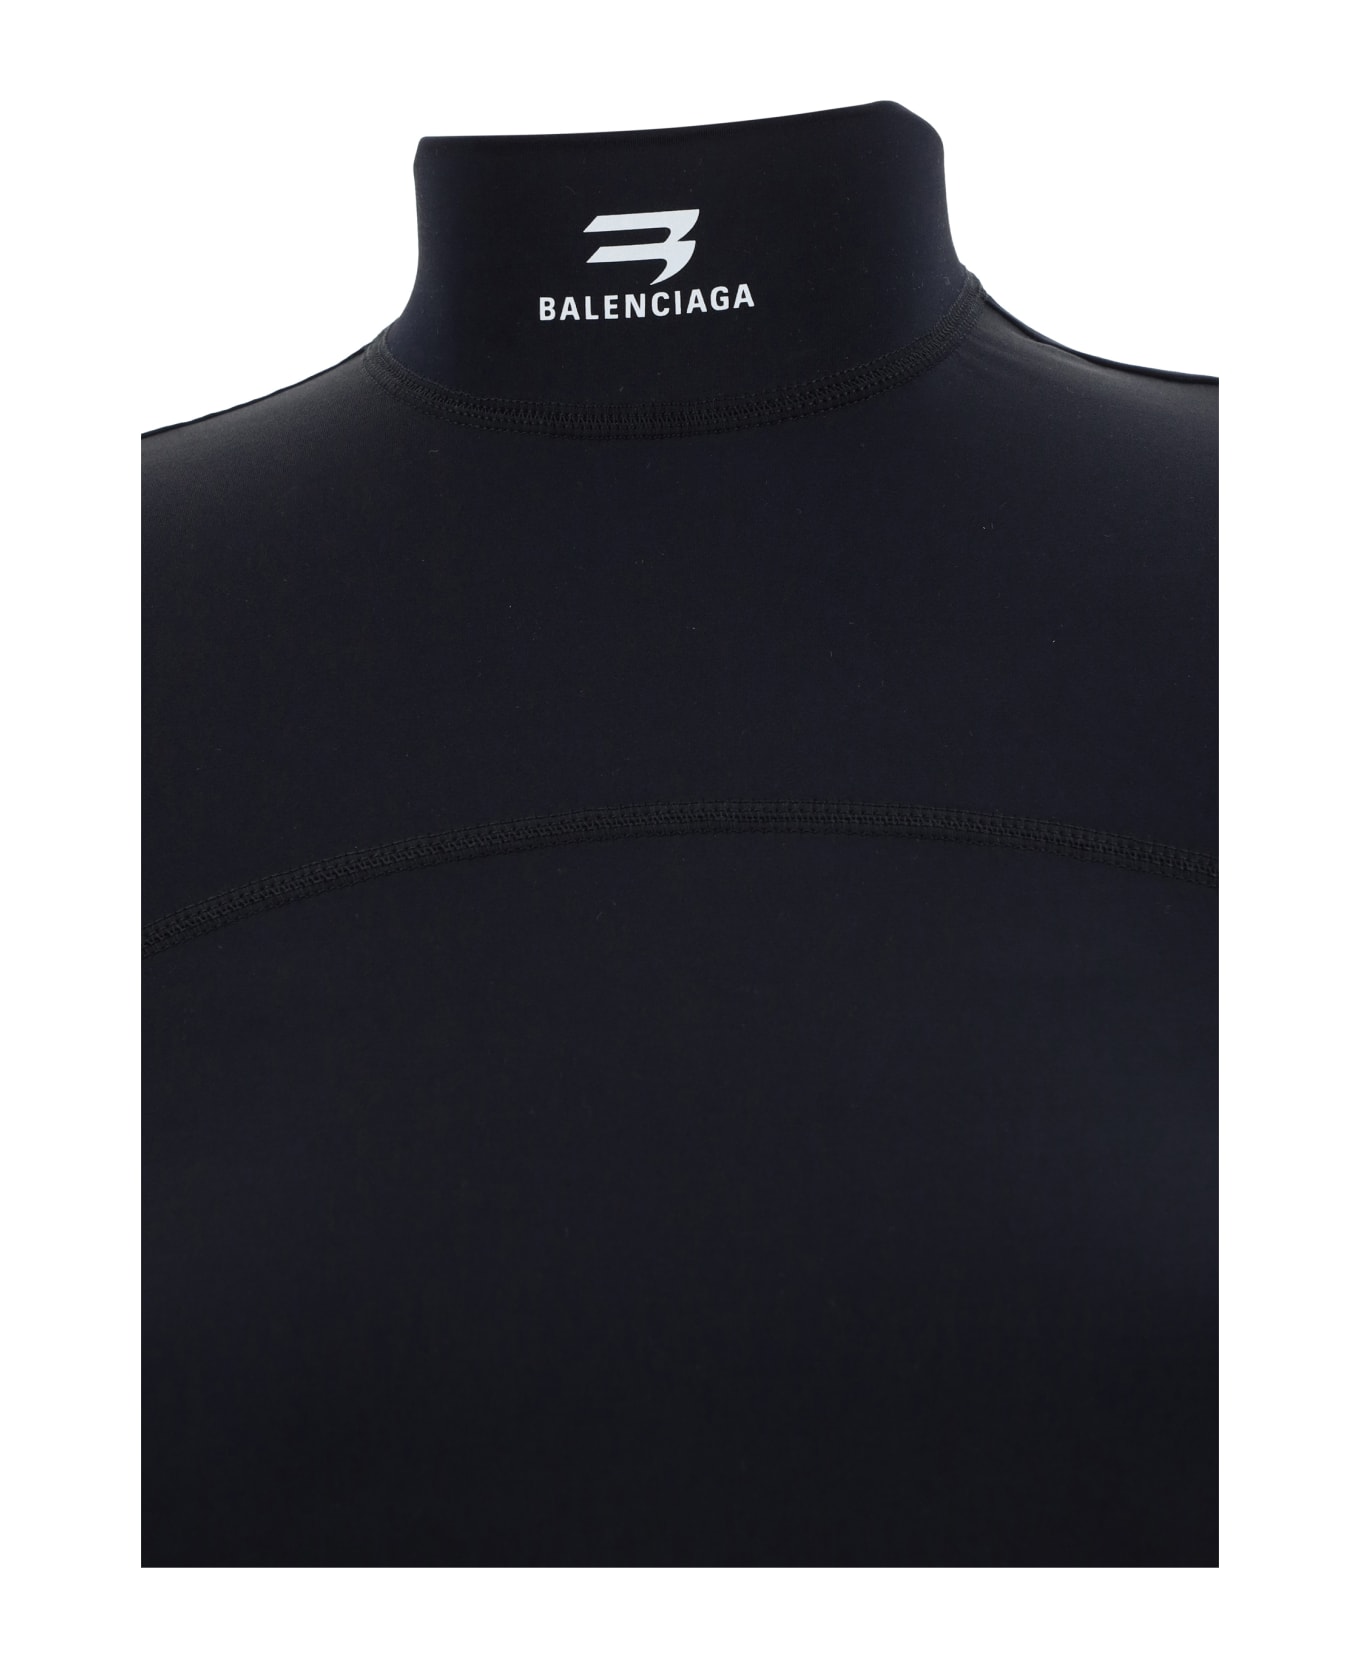 Balenciaga Long-sleeved Jersey - Black